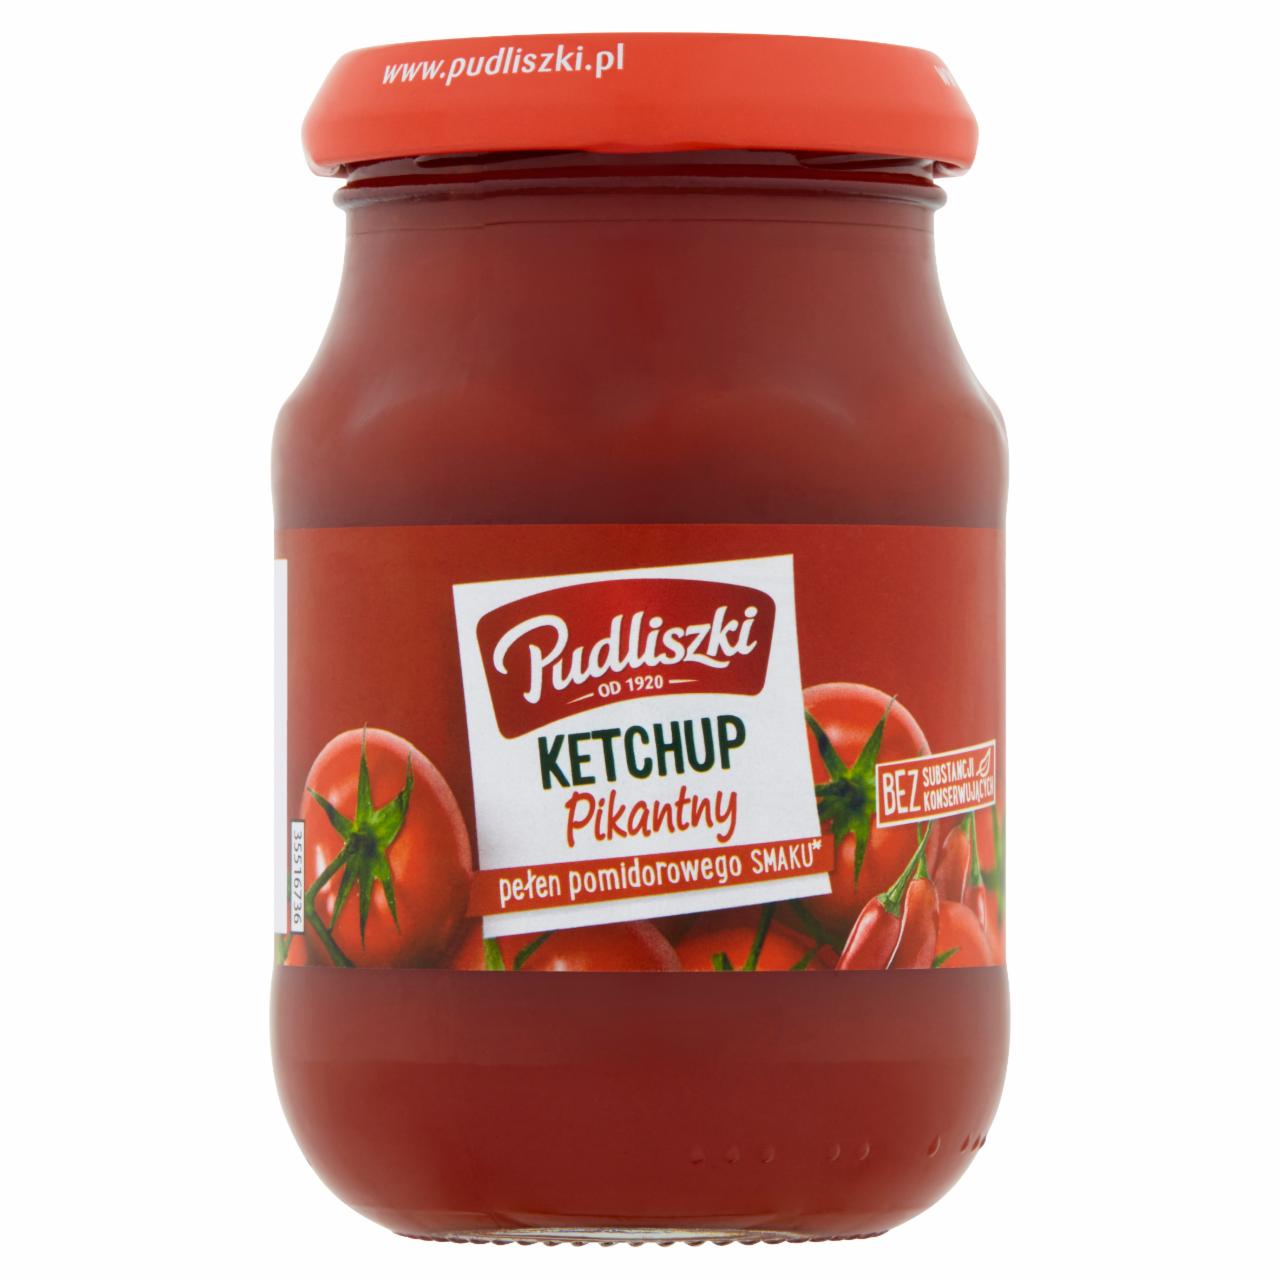 Zdjęcia - Pudliszki Ketchup pikantny 205 g